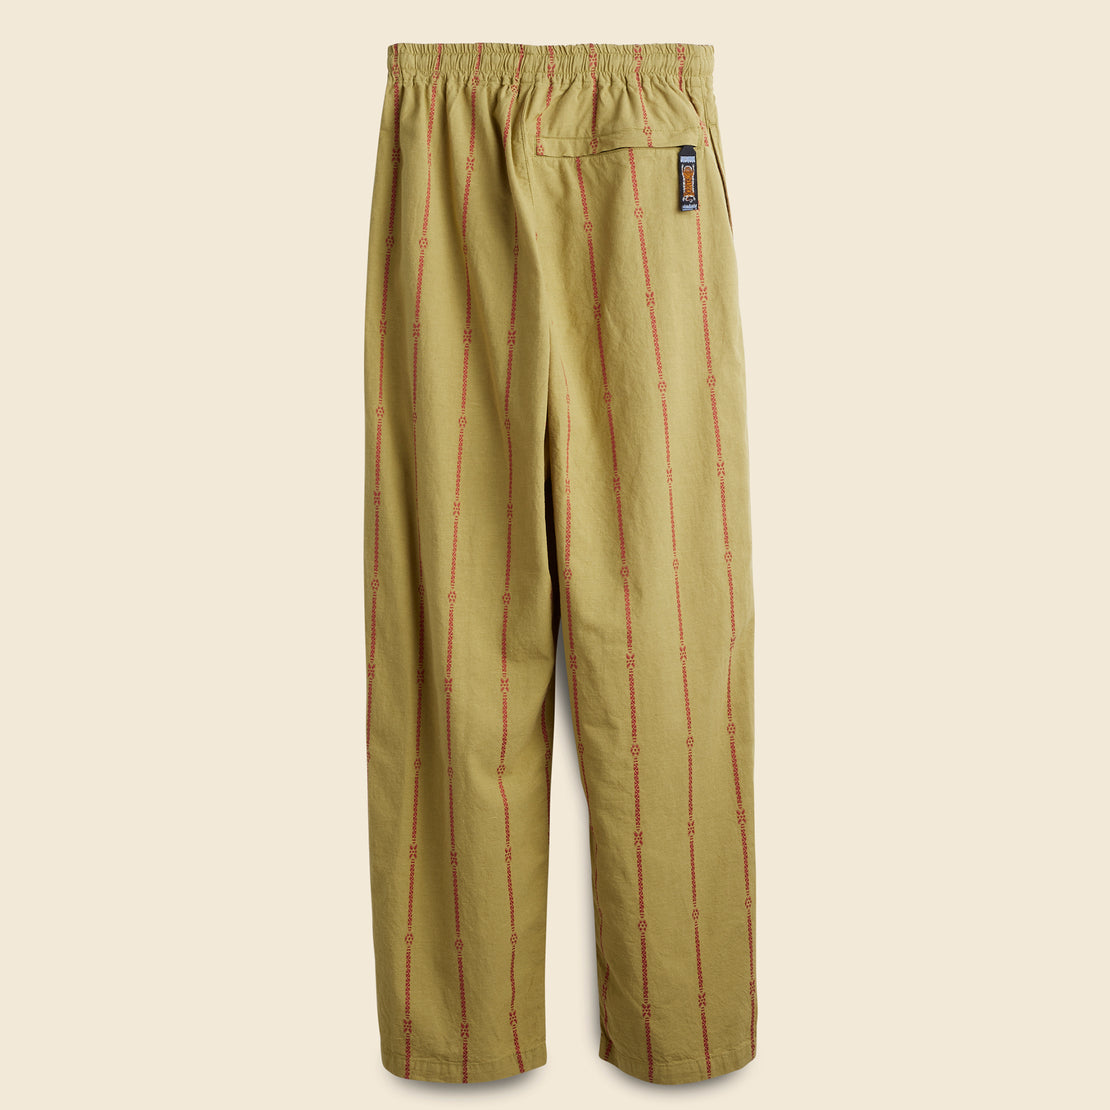 Cotton Linen Siam Stripe Easy Pants - Light Khaki - Kapital - STAG Provisions - W - Pants - Twill